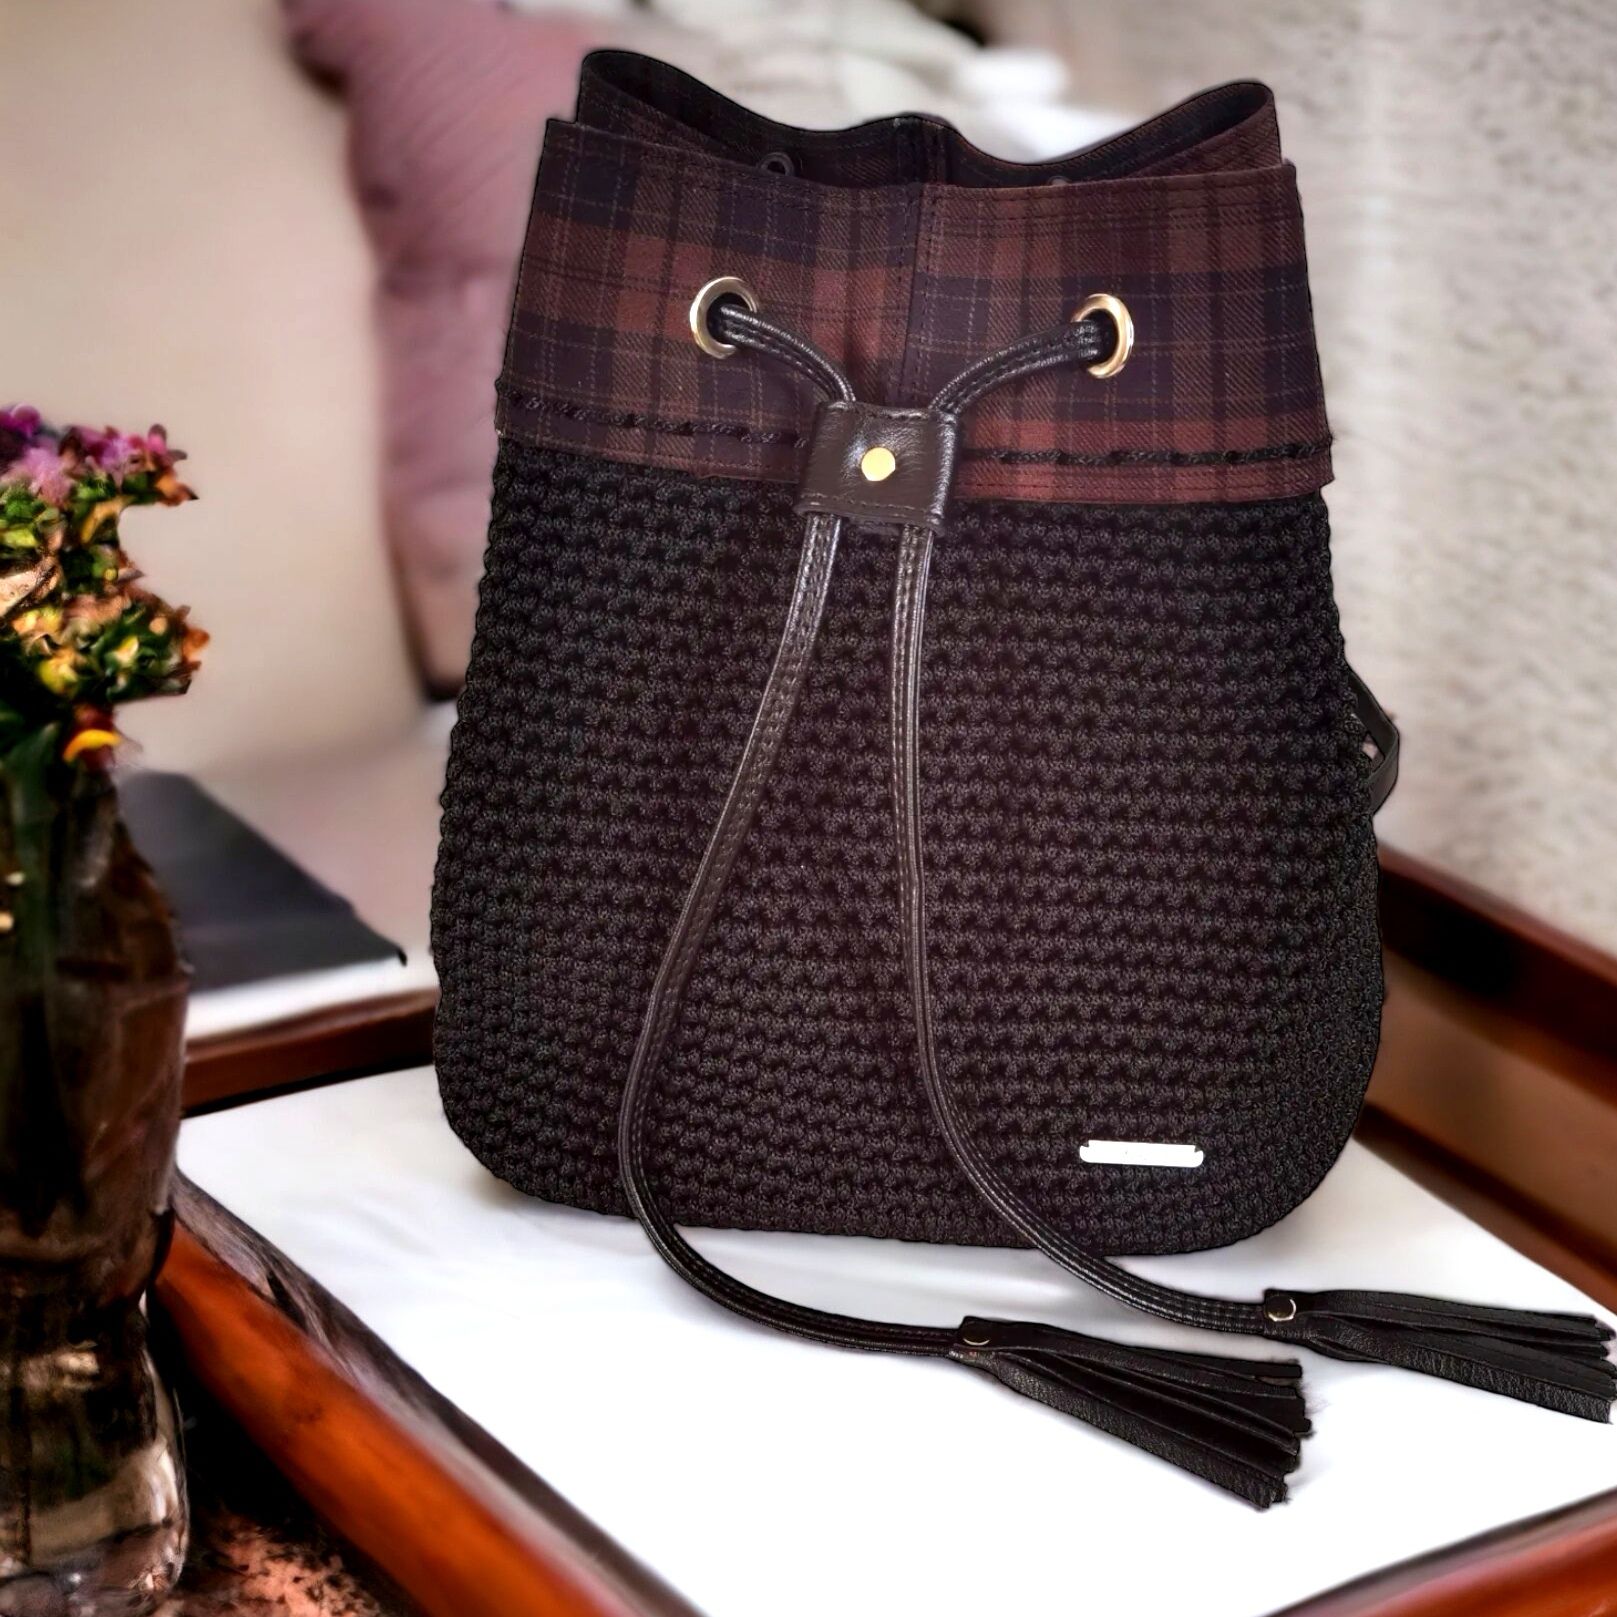 Custommade - Μαύρο πουγκί backpack με υφασμάτινη καρό ζώνη